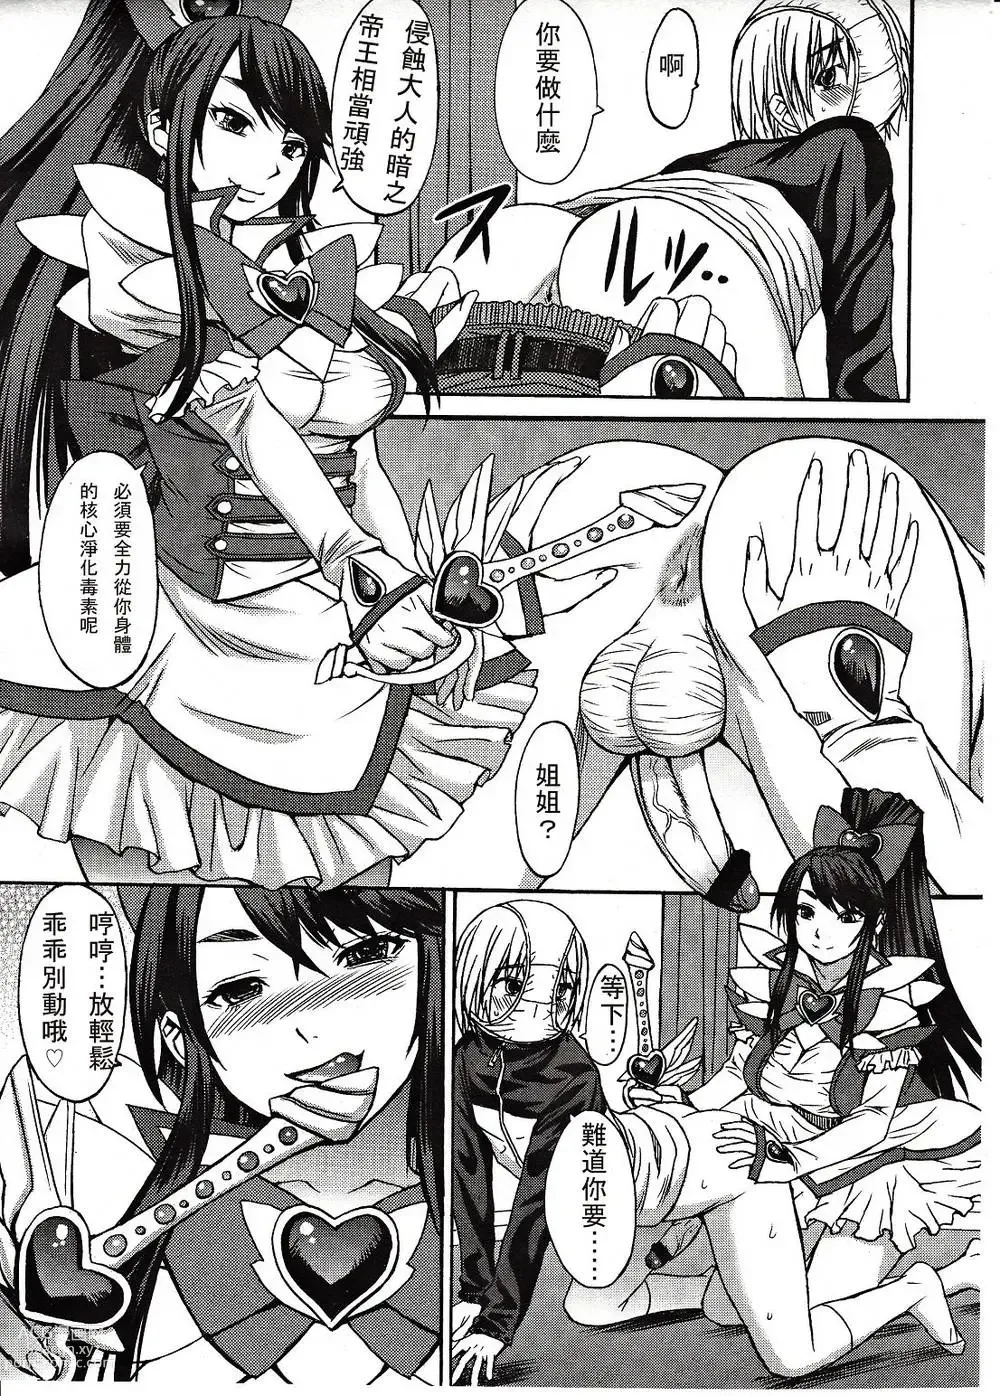 Page 251 of manga Aisarete Miru?